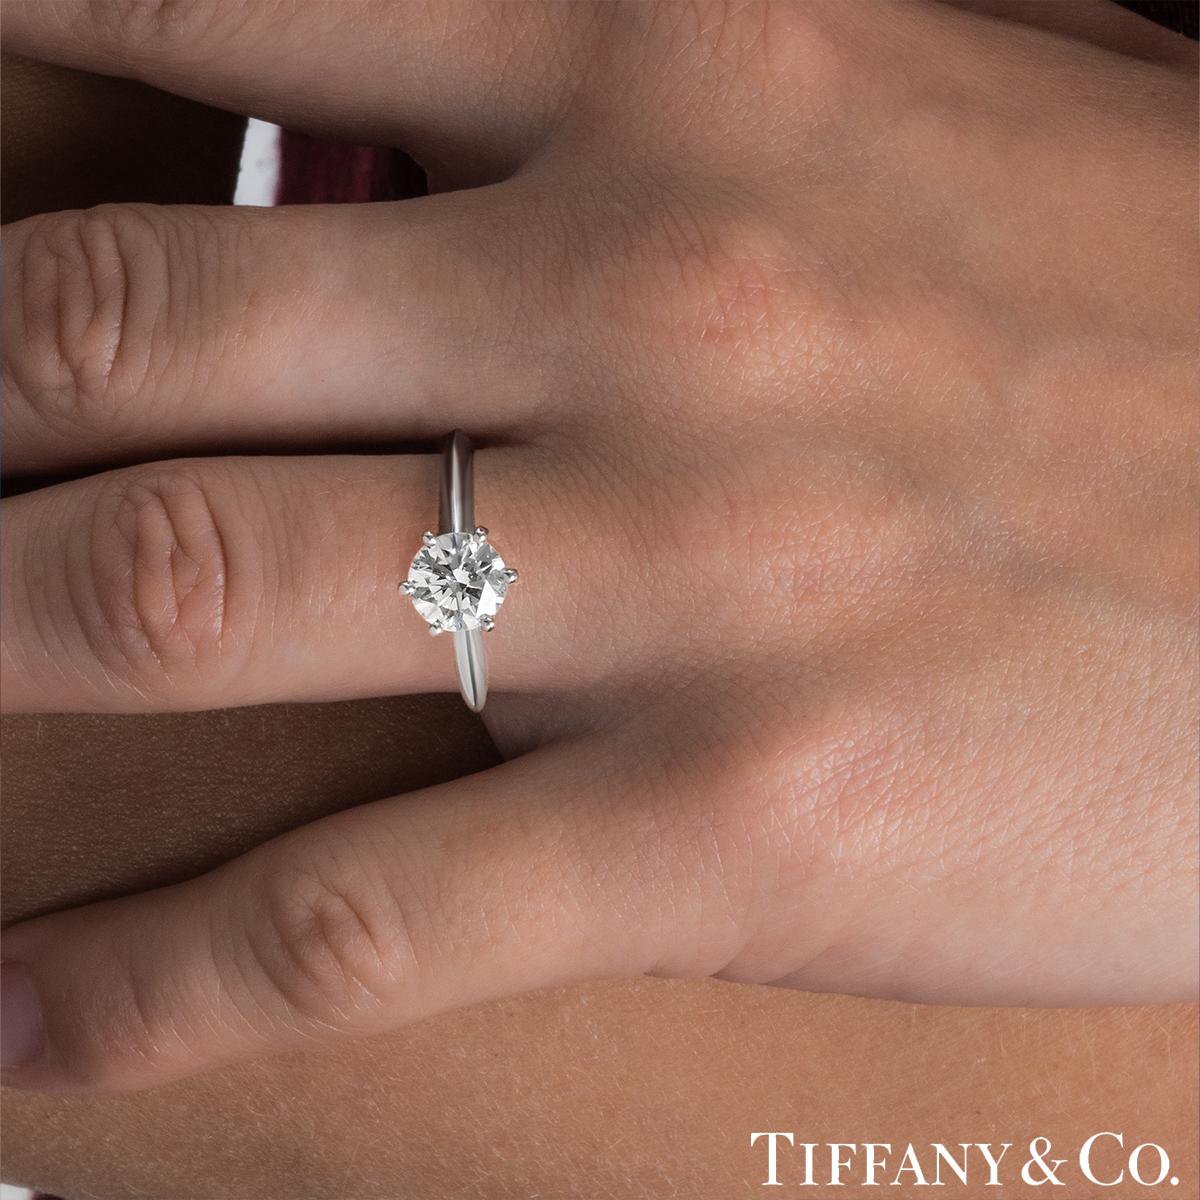 Tiffany & Co. Platin Verlobungsring mit Solitär in Diamantfassung 1,08 Karat I/VS1  im Angebot 2